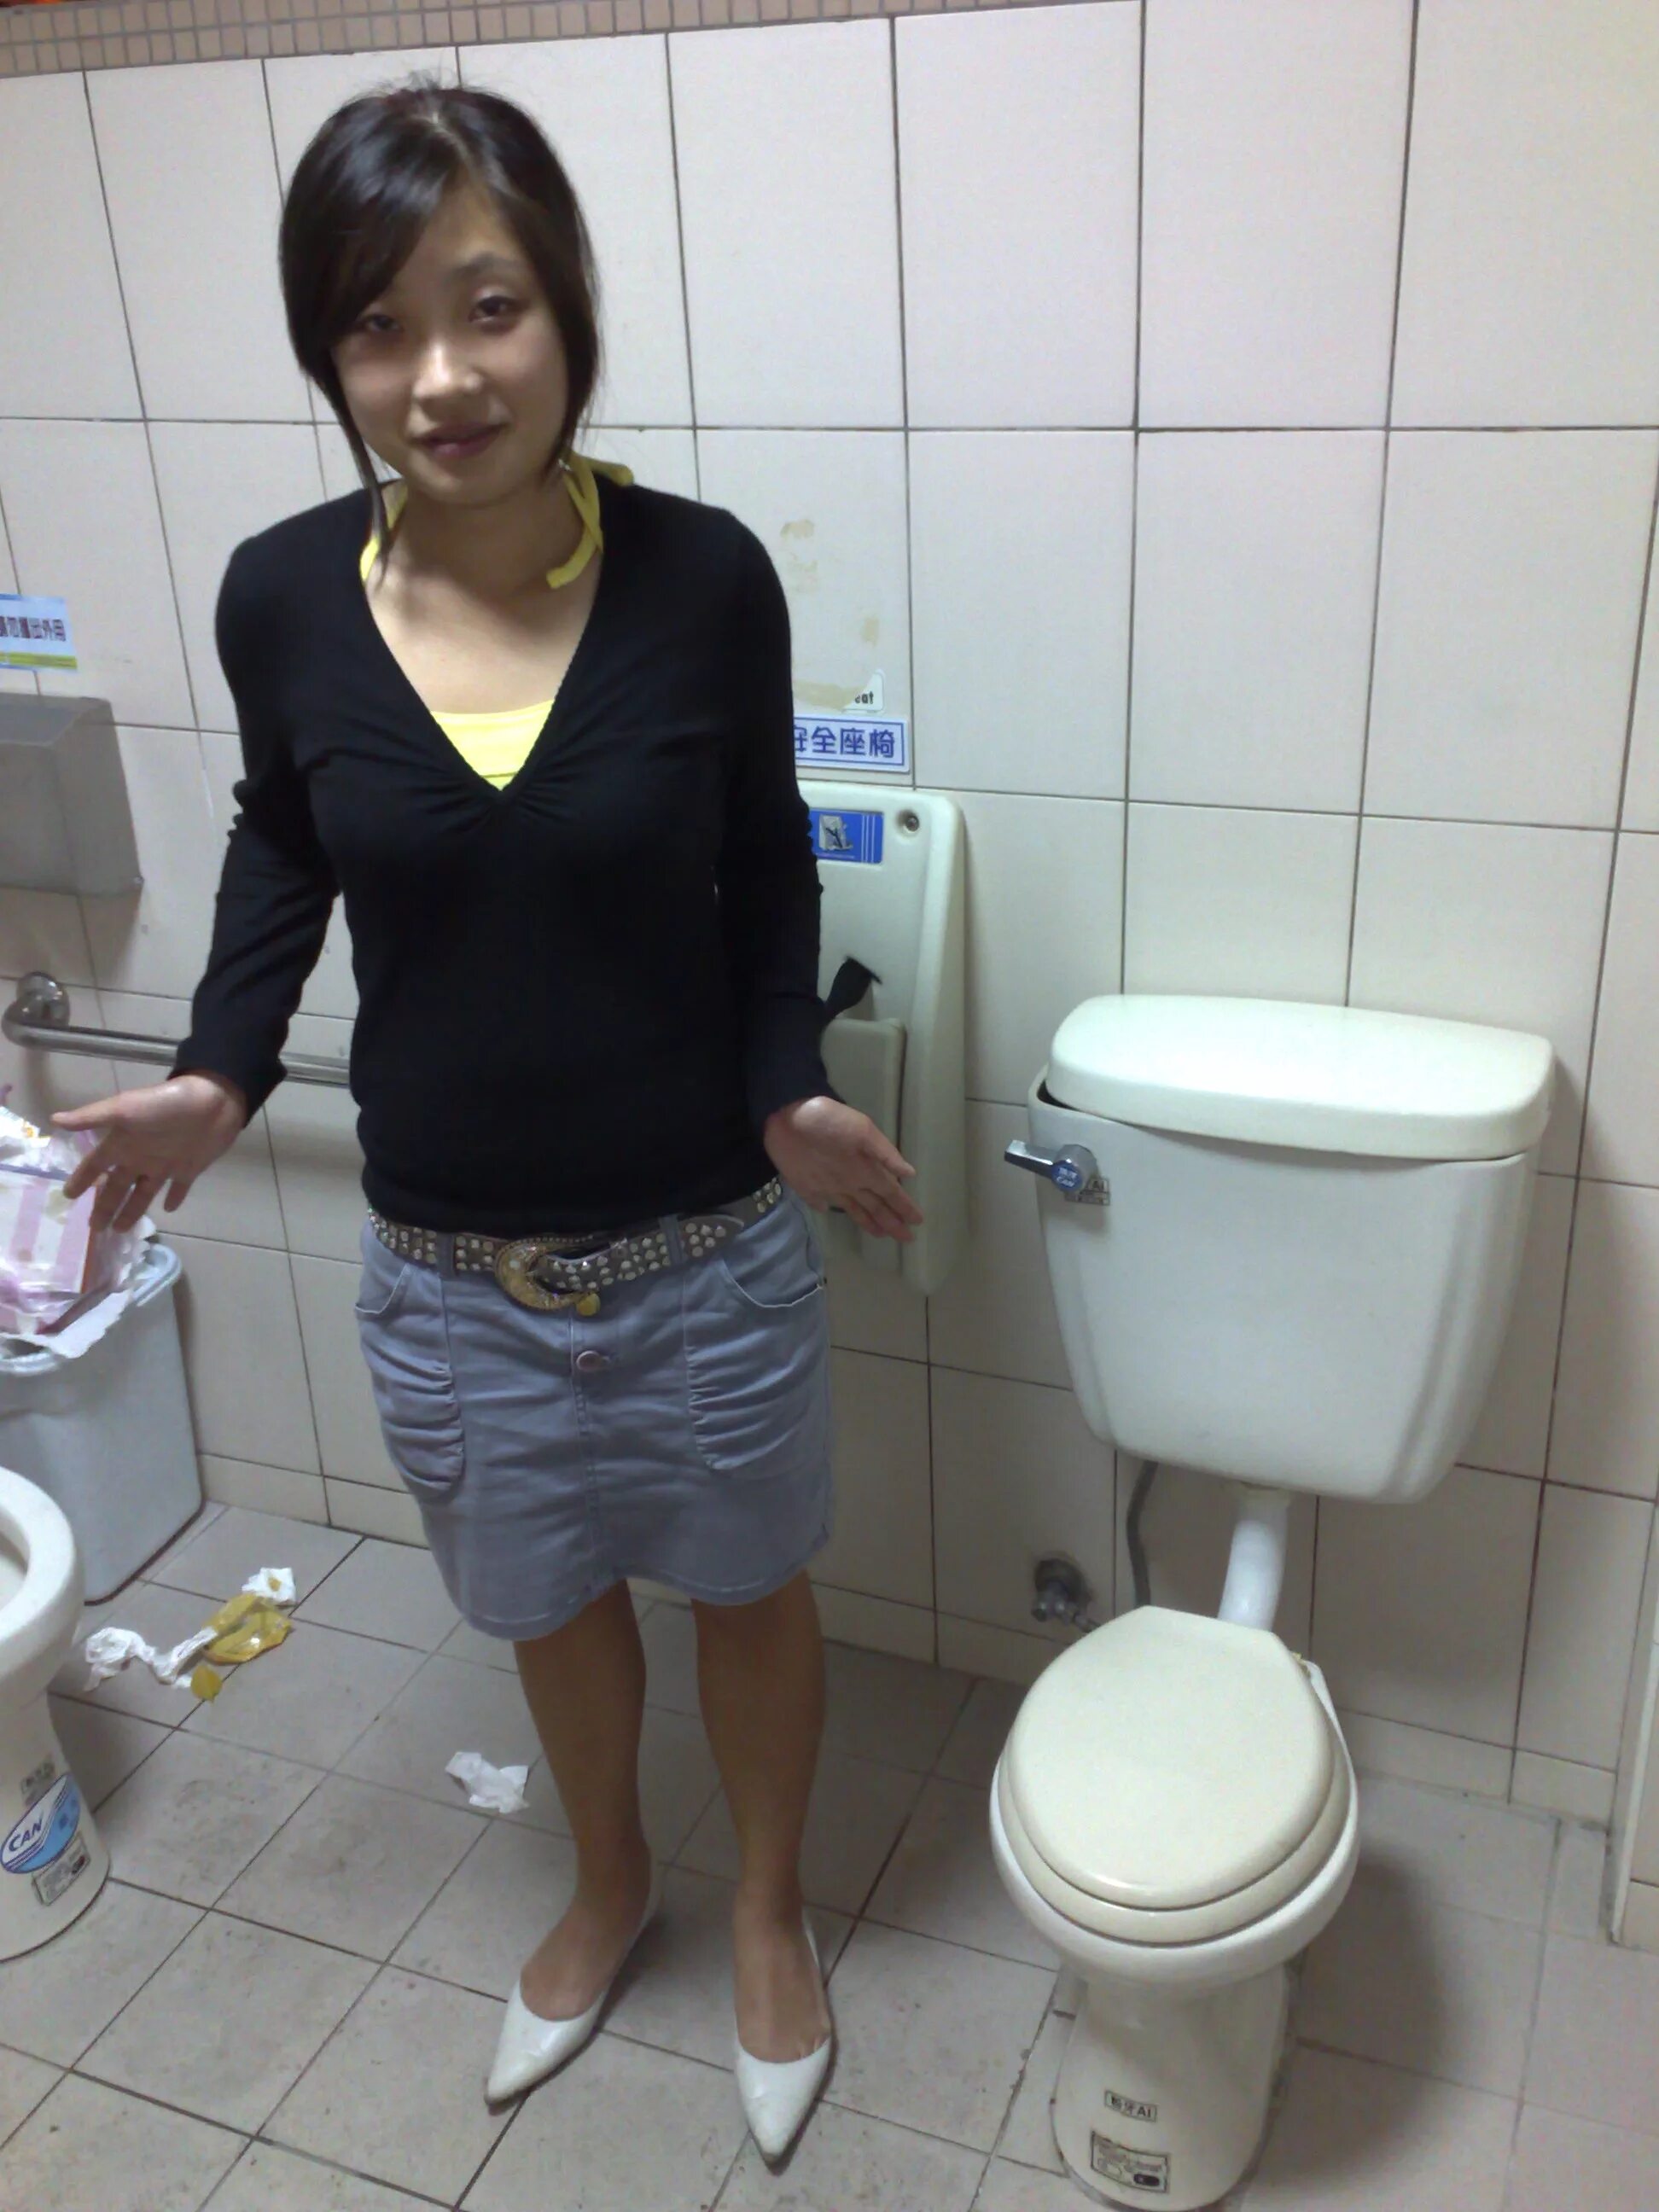 Девушки в туалете на улице. Девочка в туалете. Туалет азиатского типа. Красивая девушка в туалете. Азиатский унитаз.